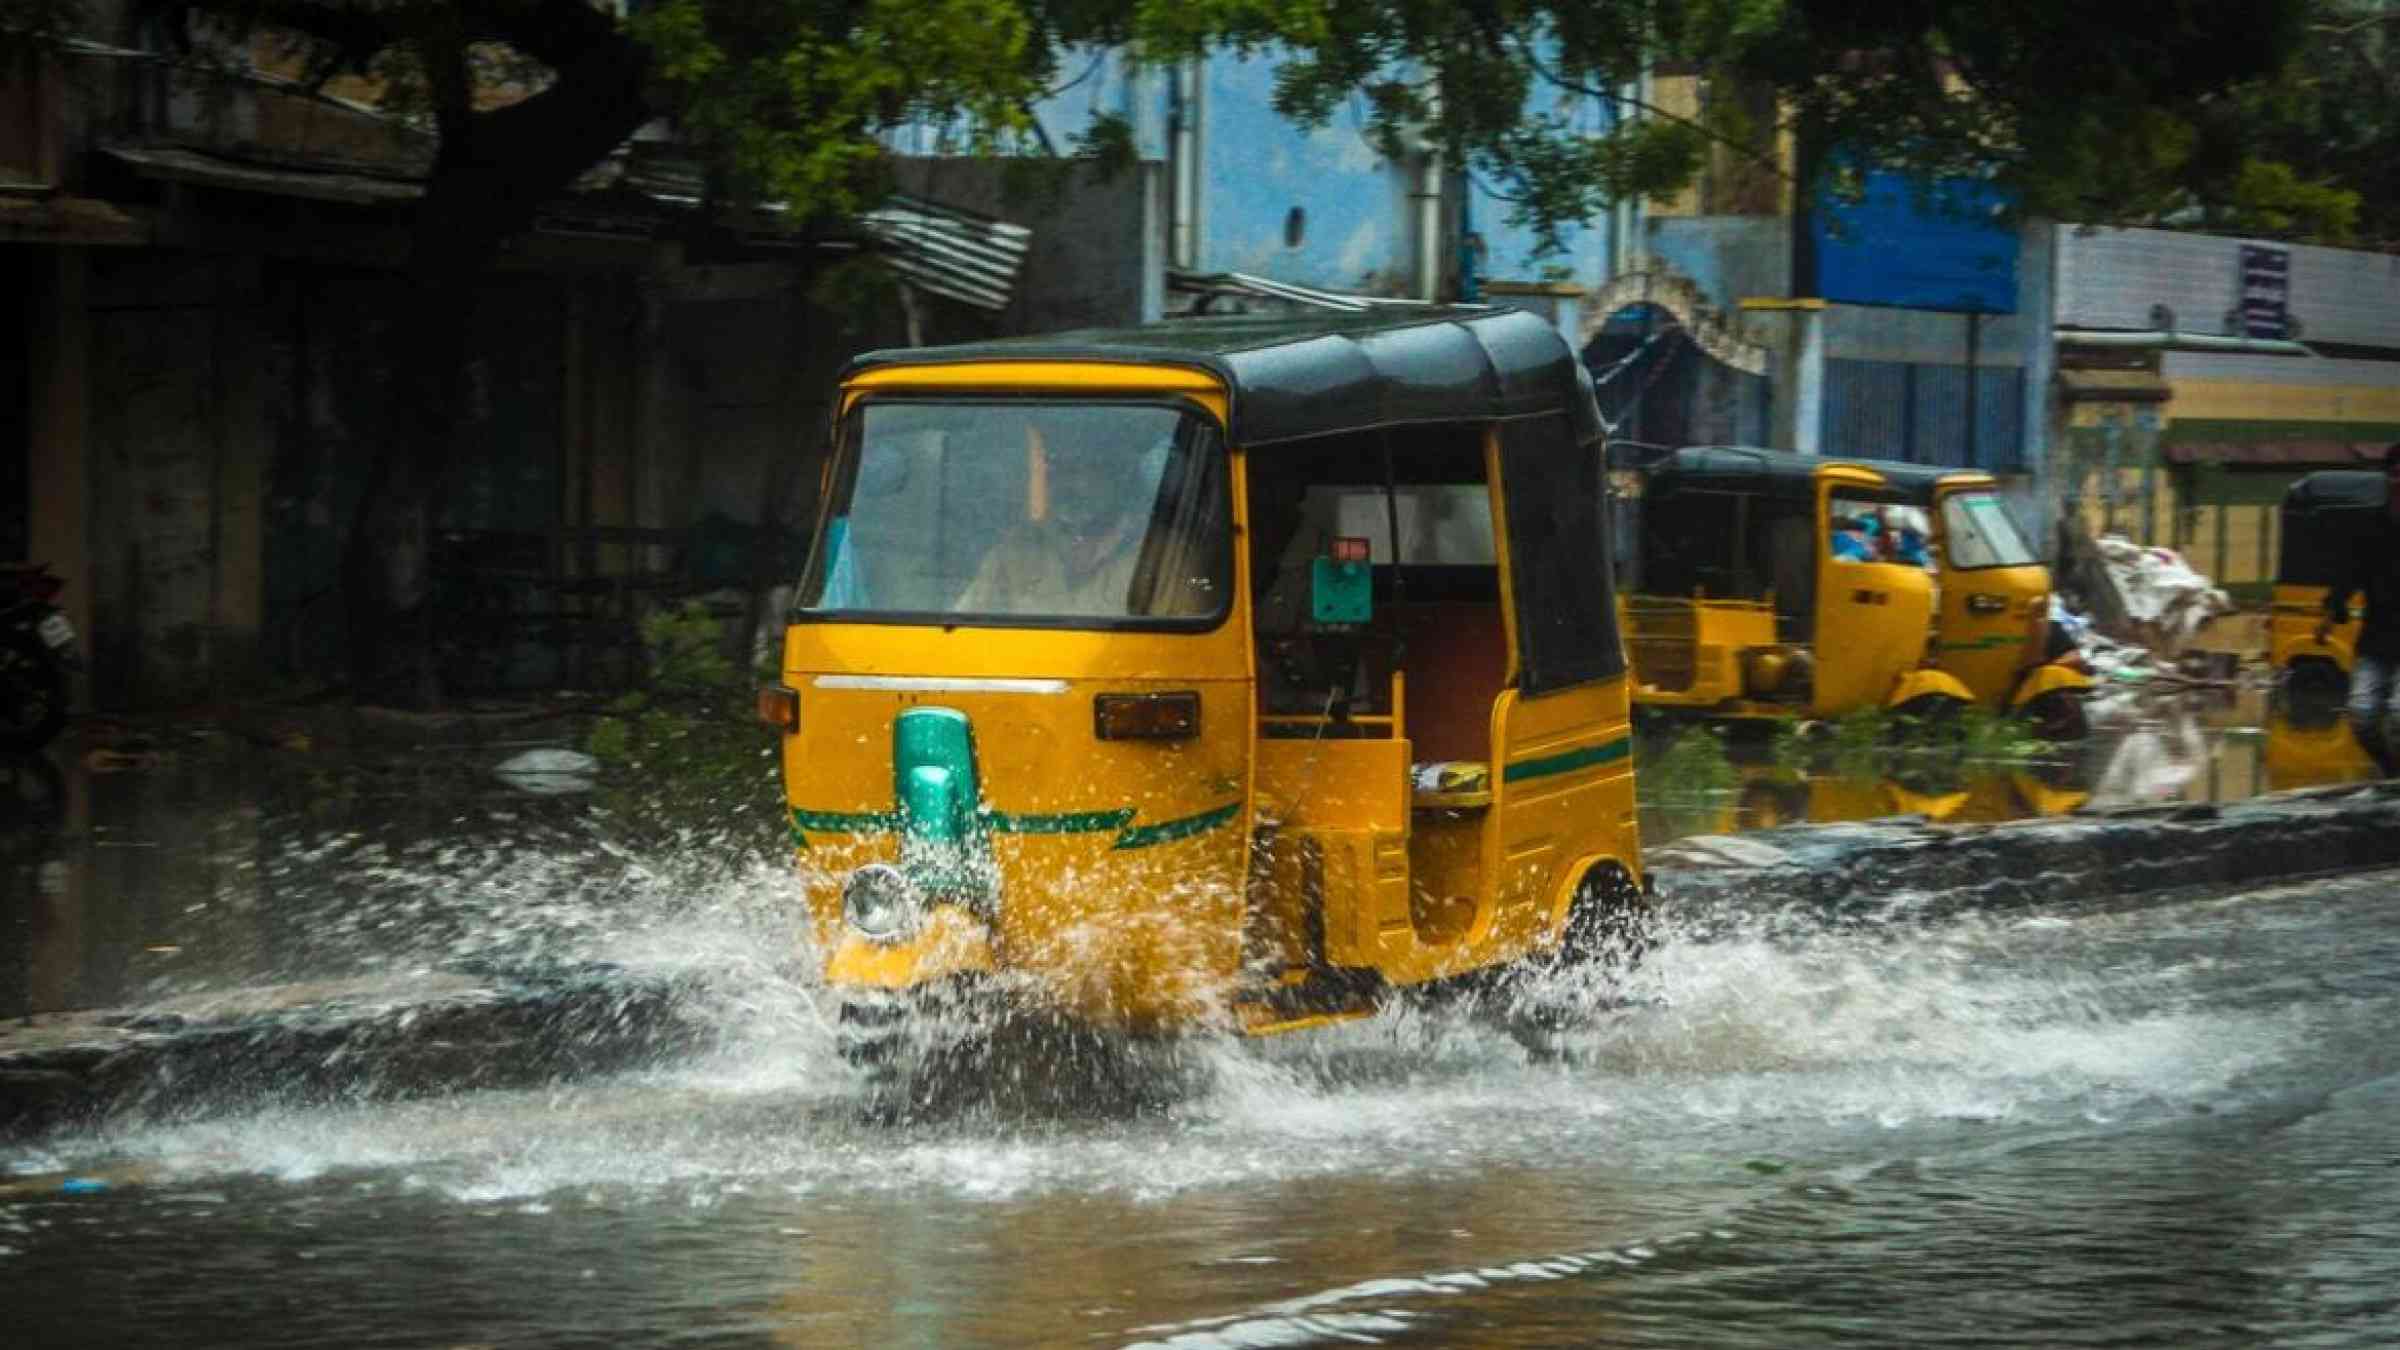 Tuktuk driving in a flooded street